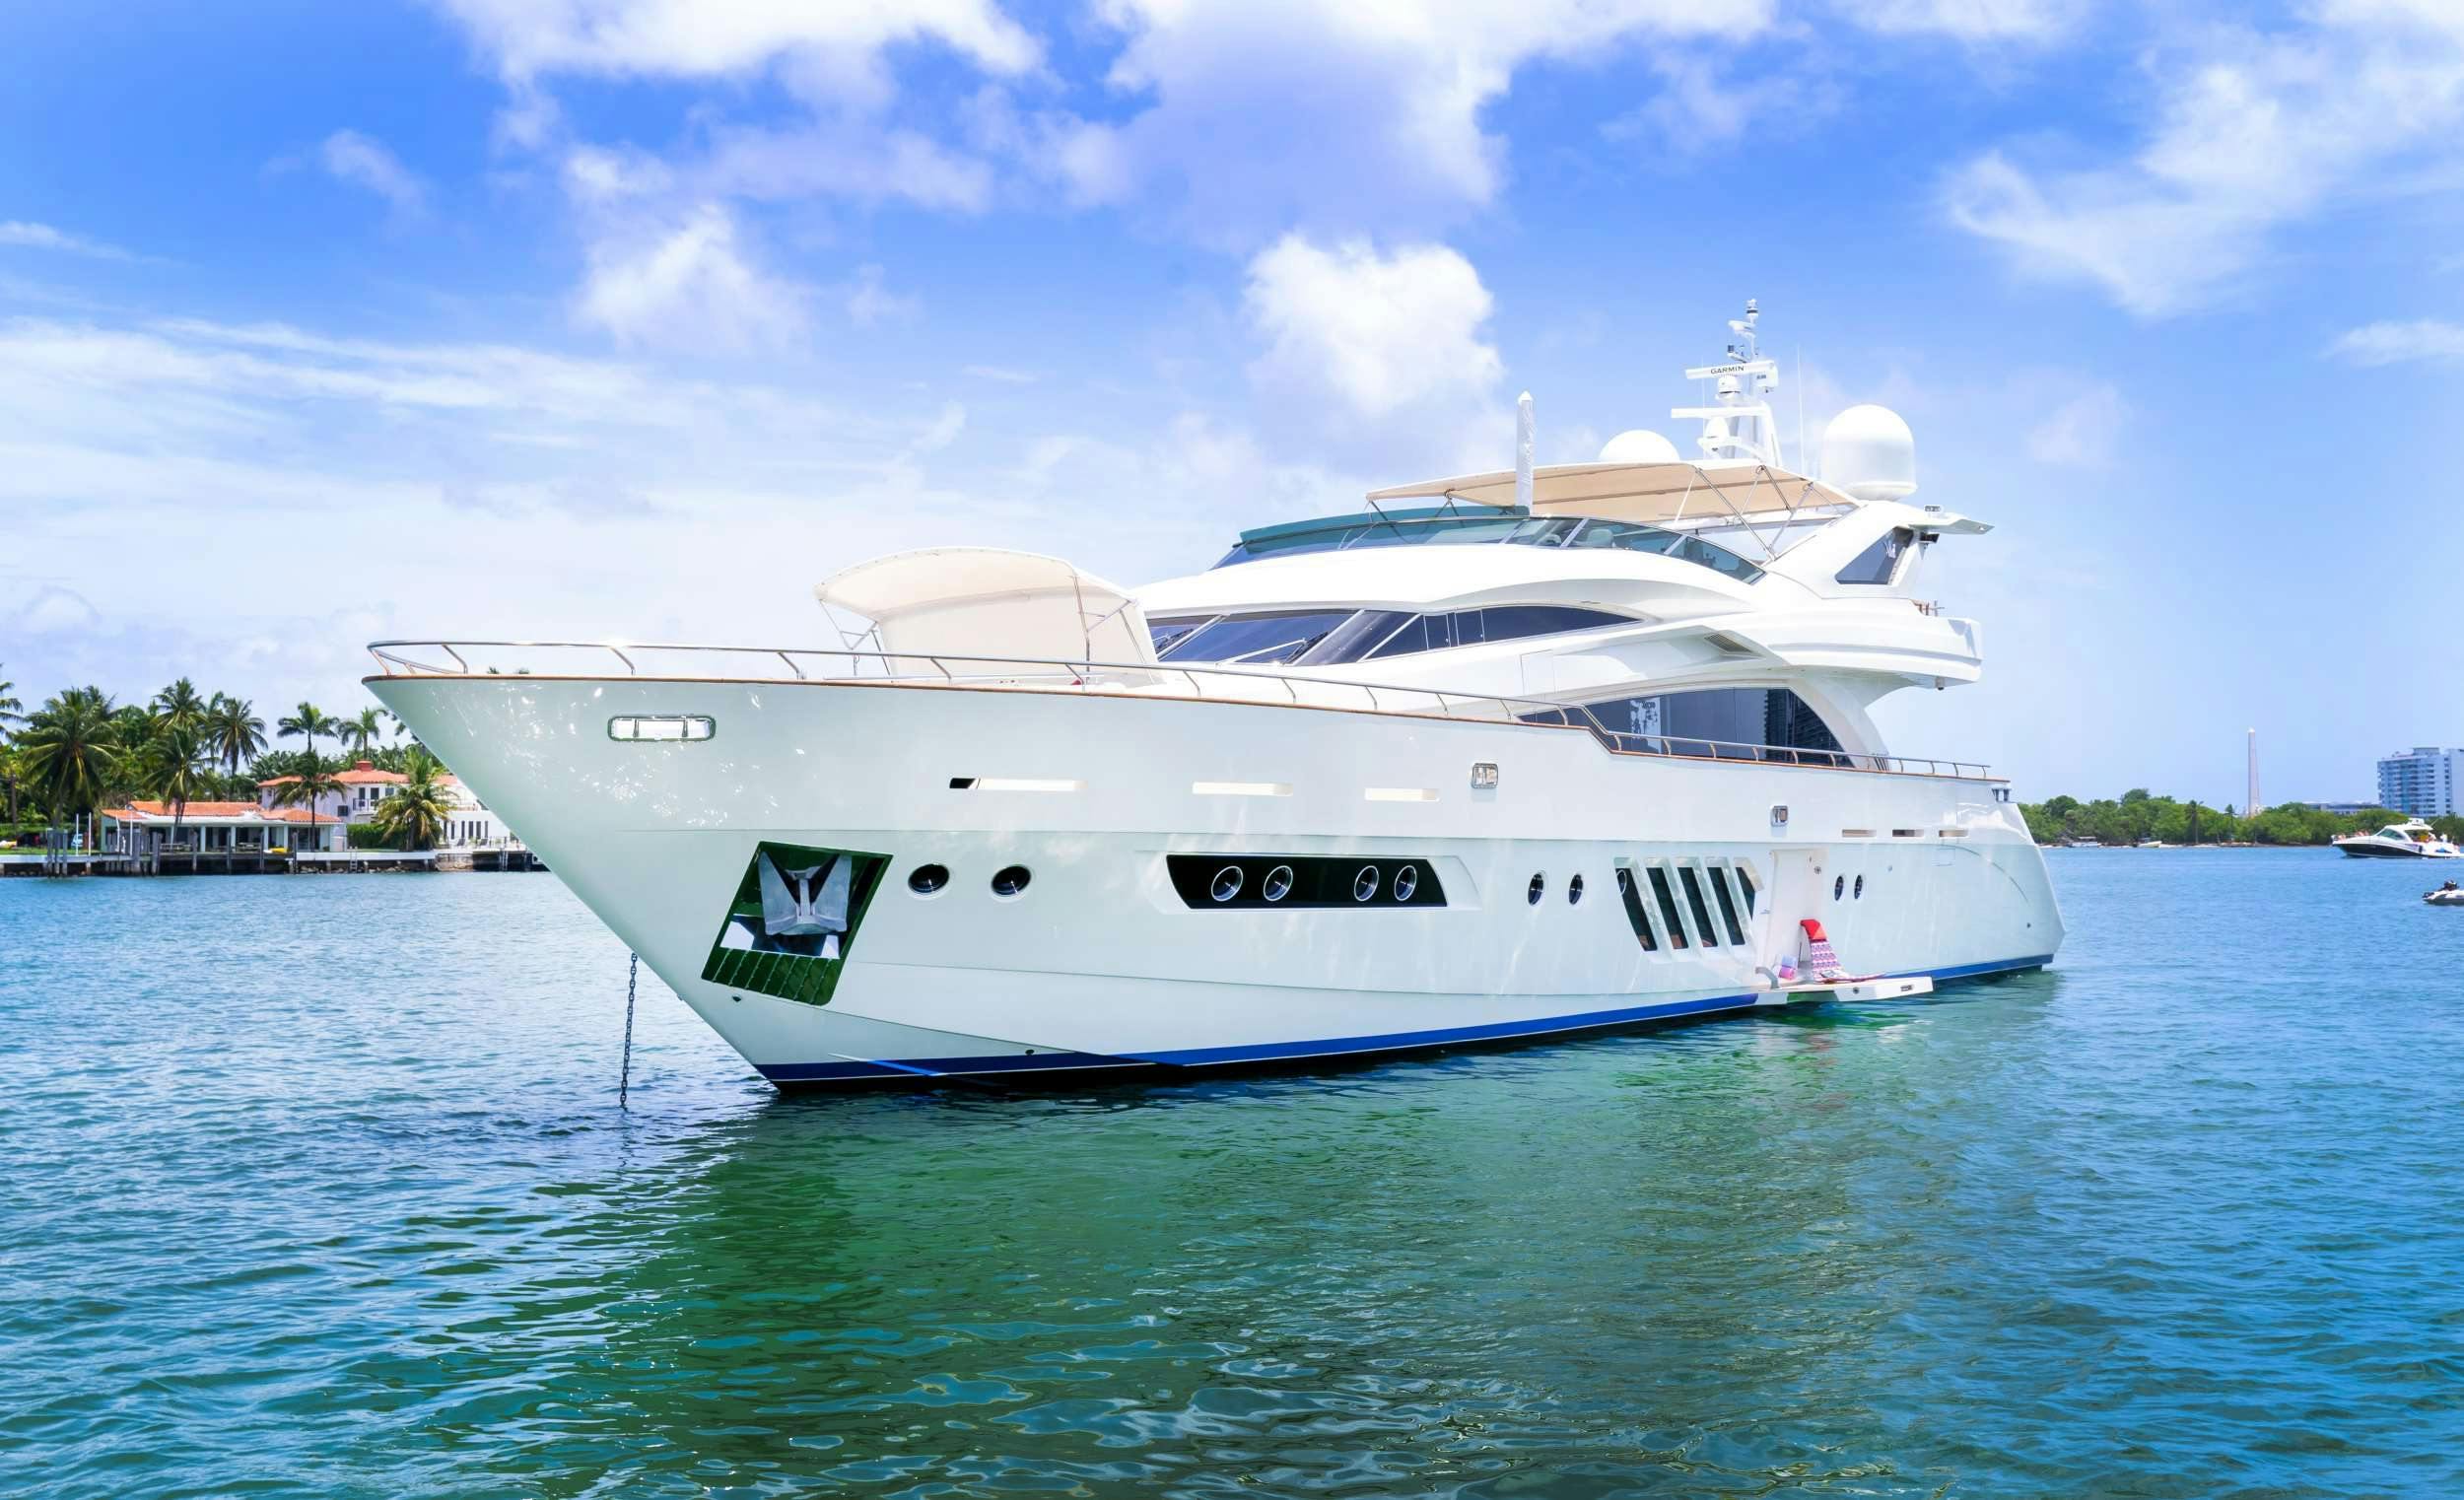 95 DOMINATOR - Yacht Charter USA & Boat hire in US East Coast & Bahamas 1